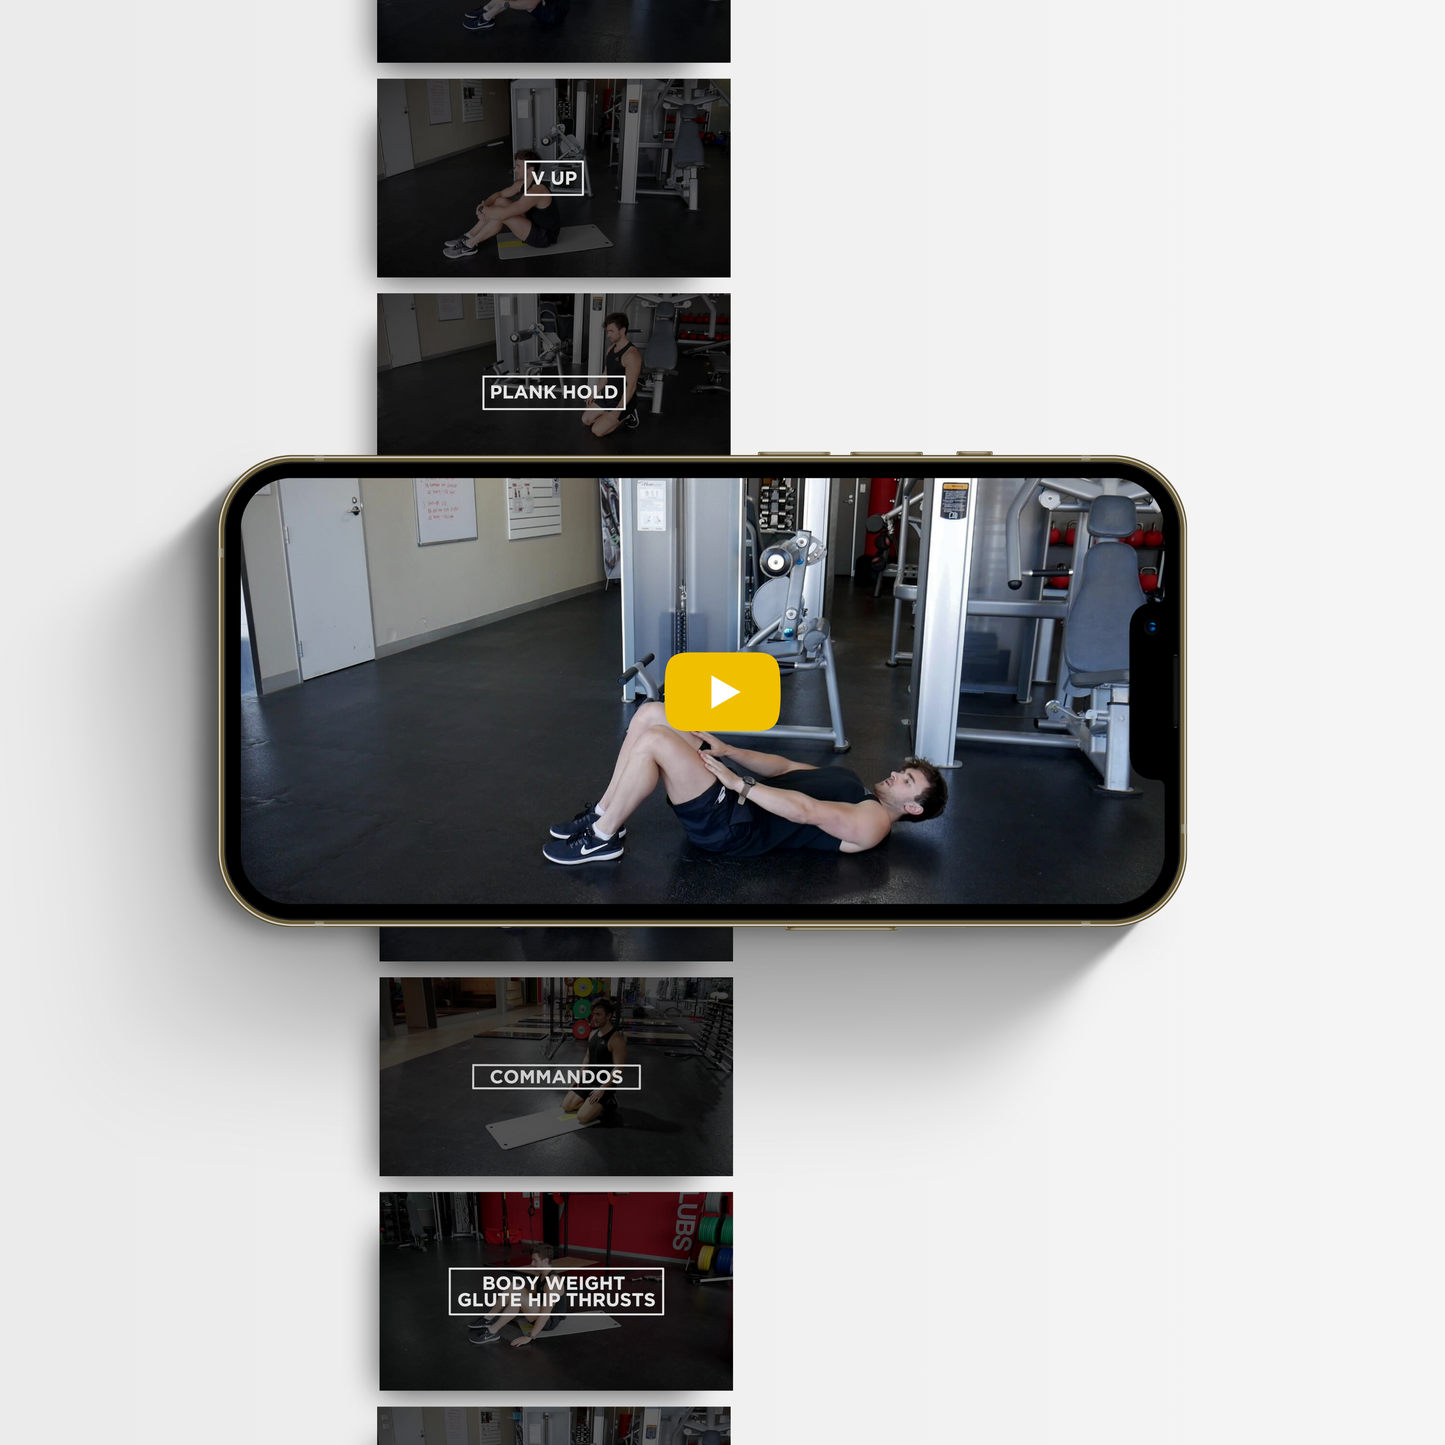 400 Exercise Complete Video Bundle For Men